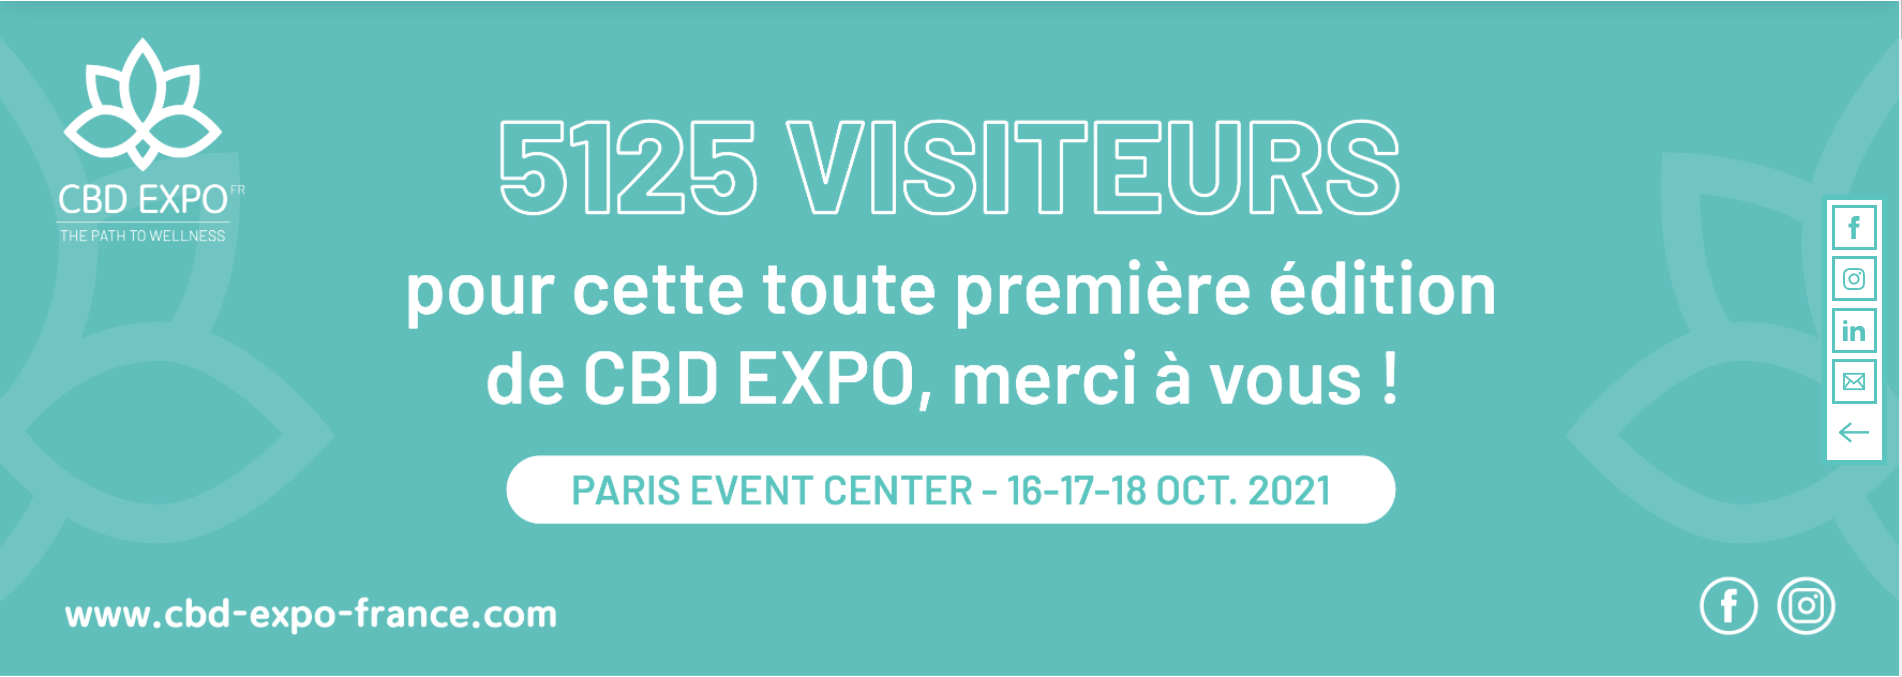 CBD Expo France : le salon 100% CBD